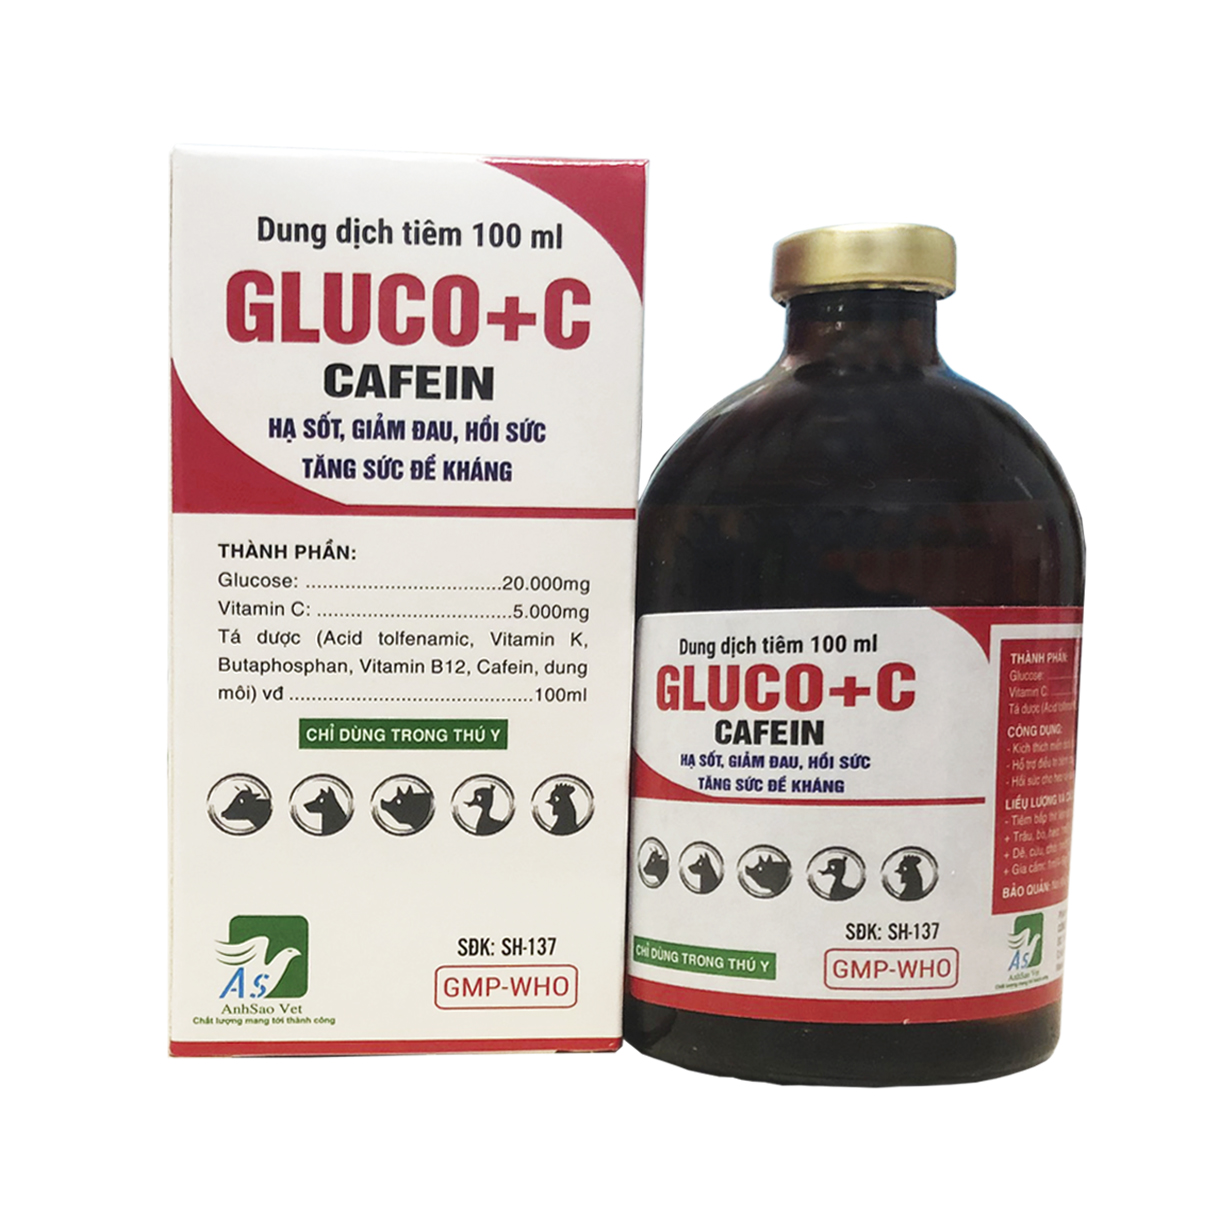 GLUCO+C - CAFEIN